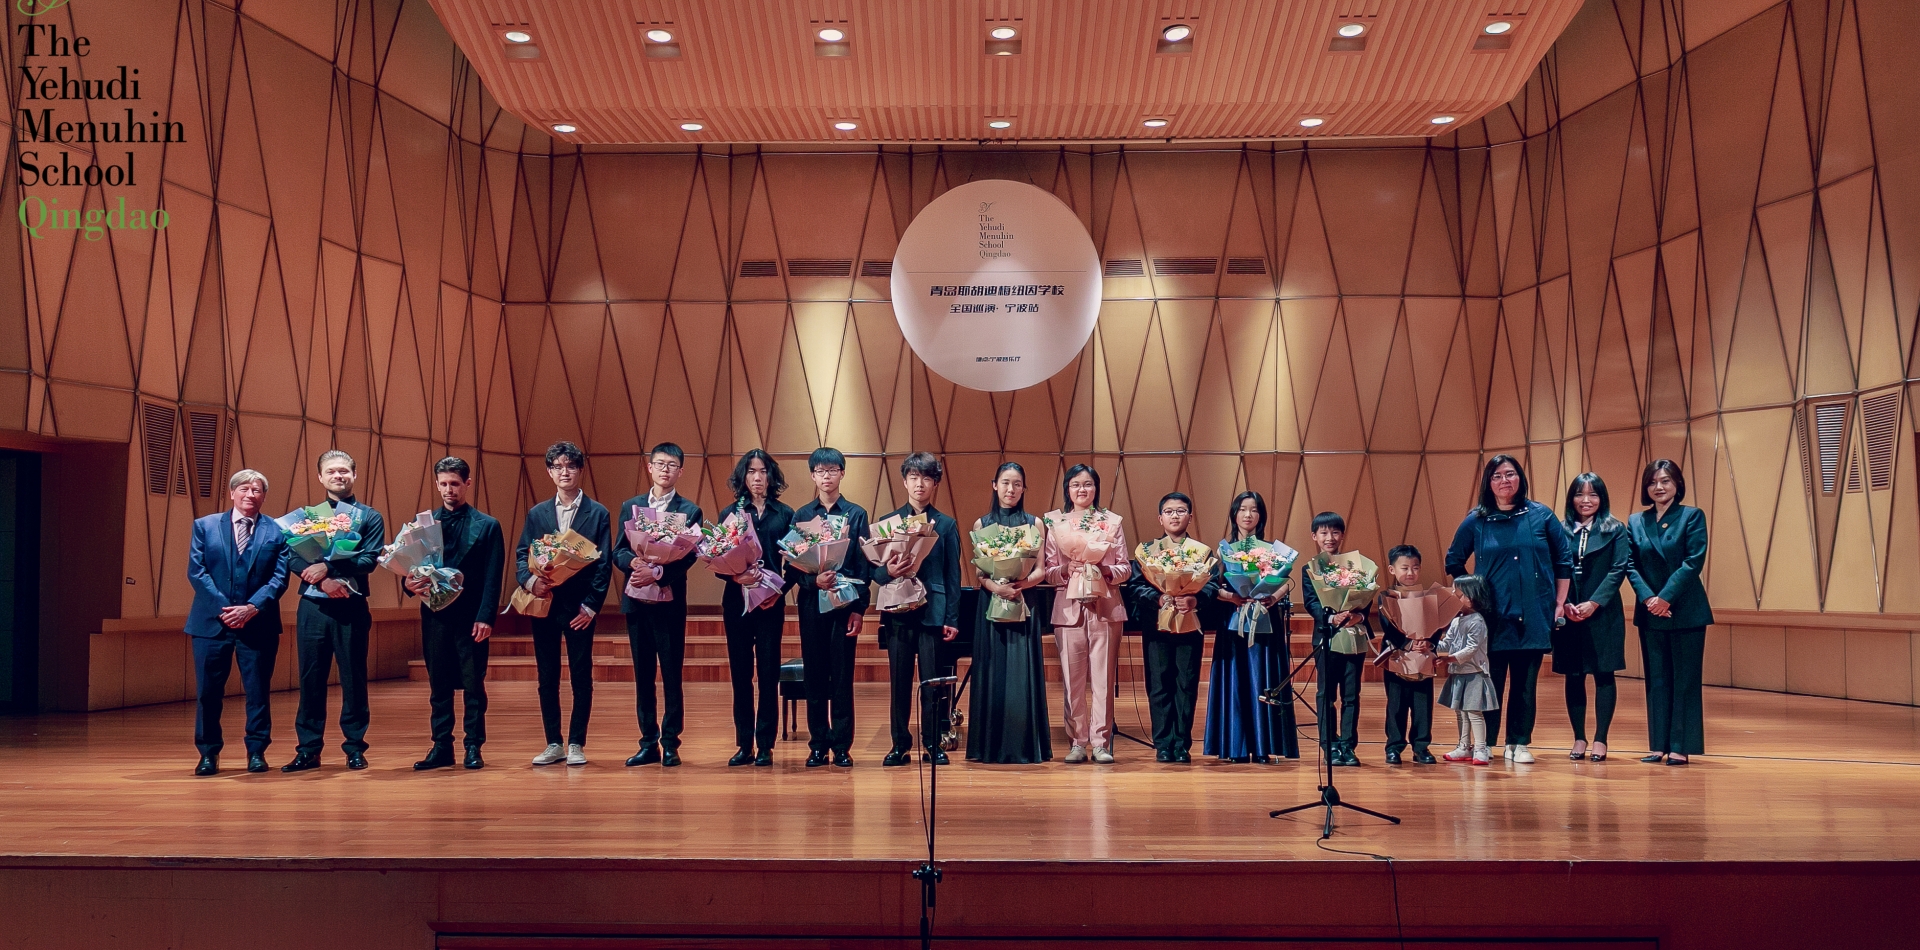 Honoring the Masters | The Yehudi Menuhin School Qingdao National Tour: A Retrospective of the Ningbo Station